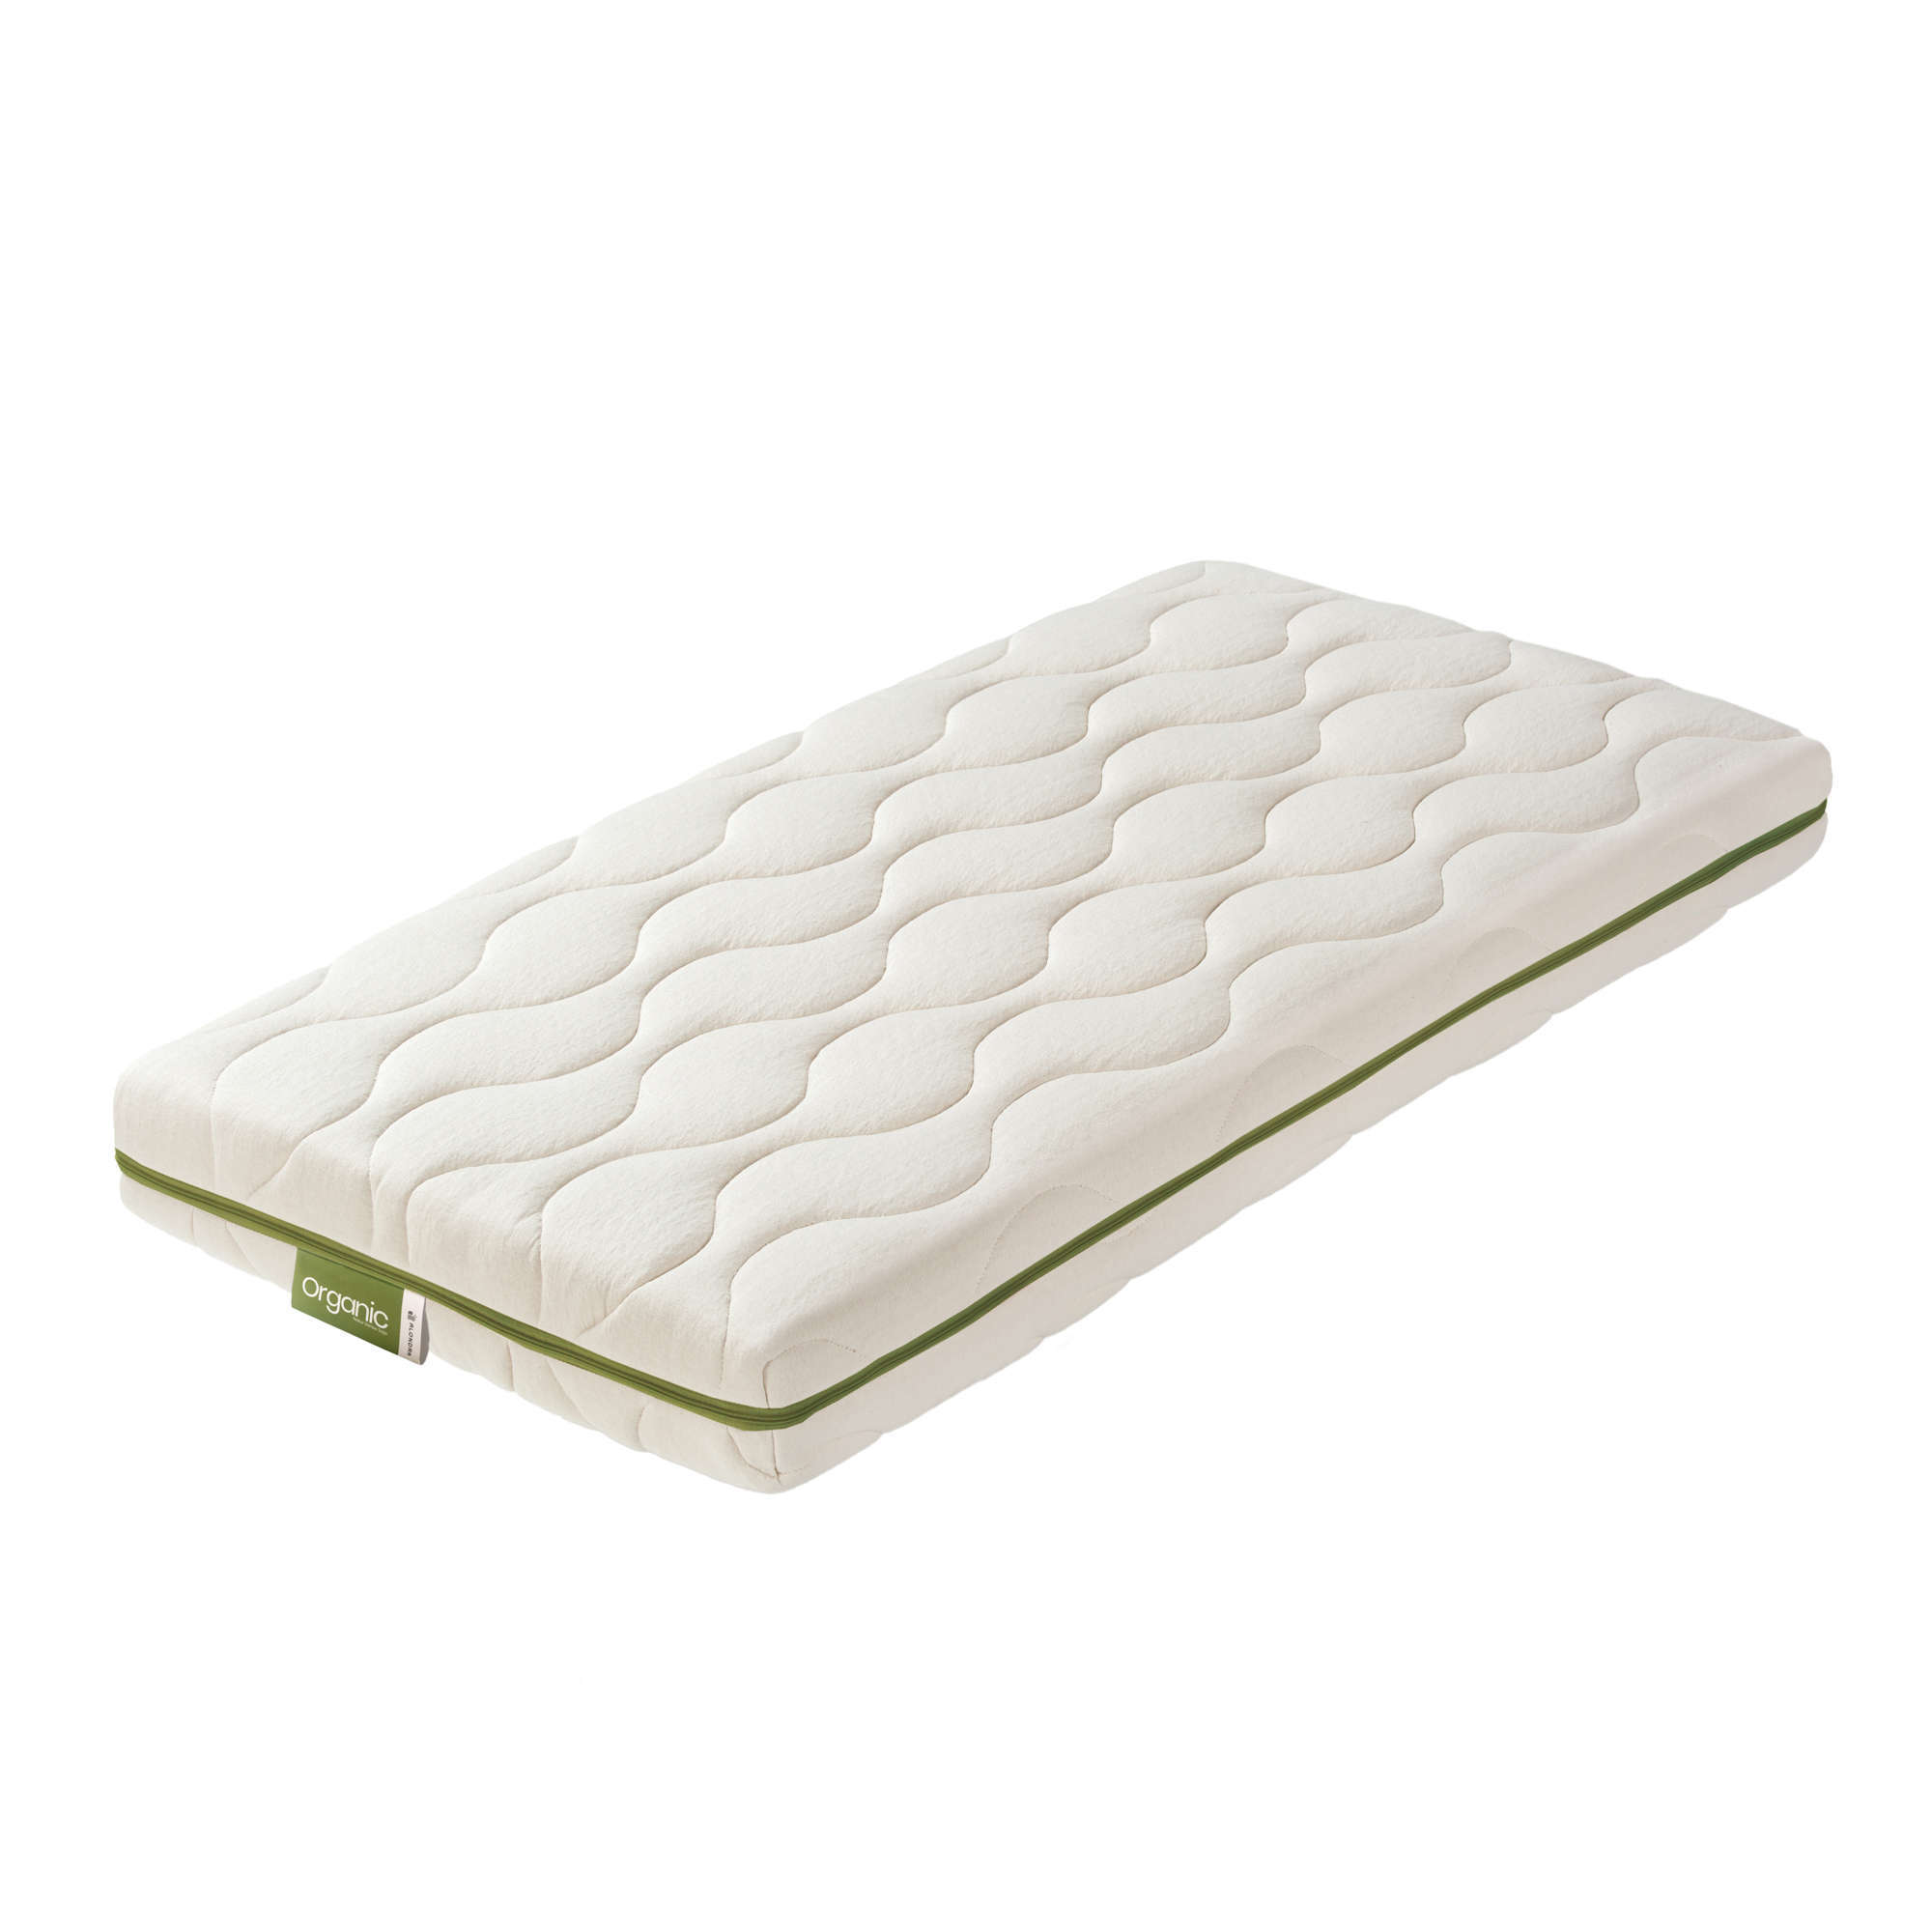 Co-sleeping cot mattresses